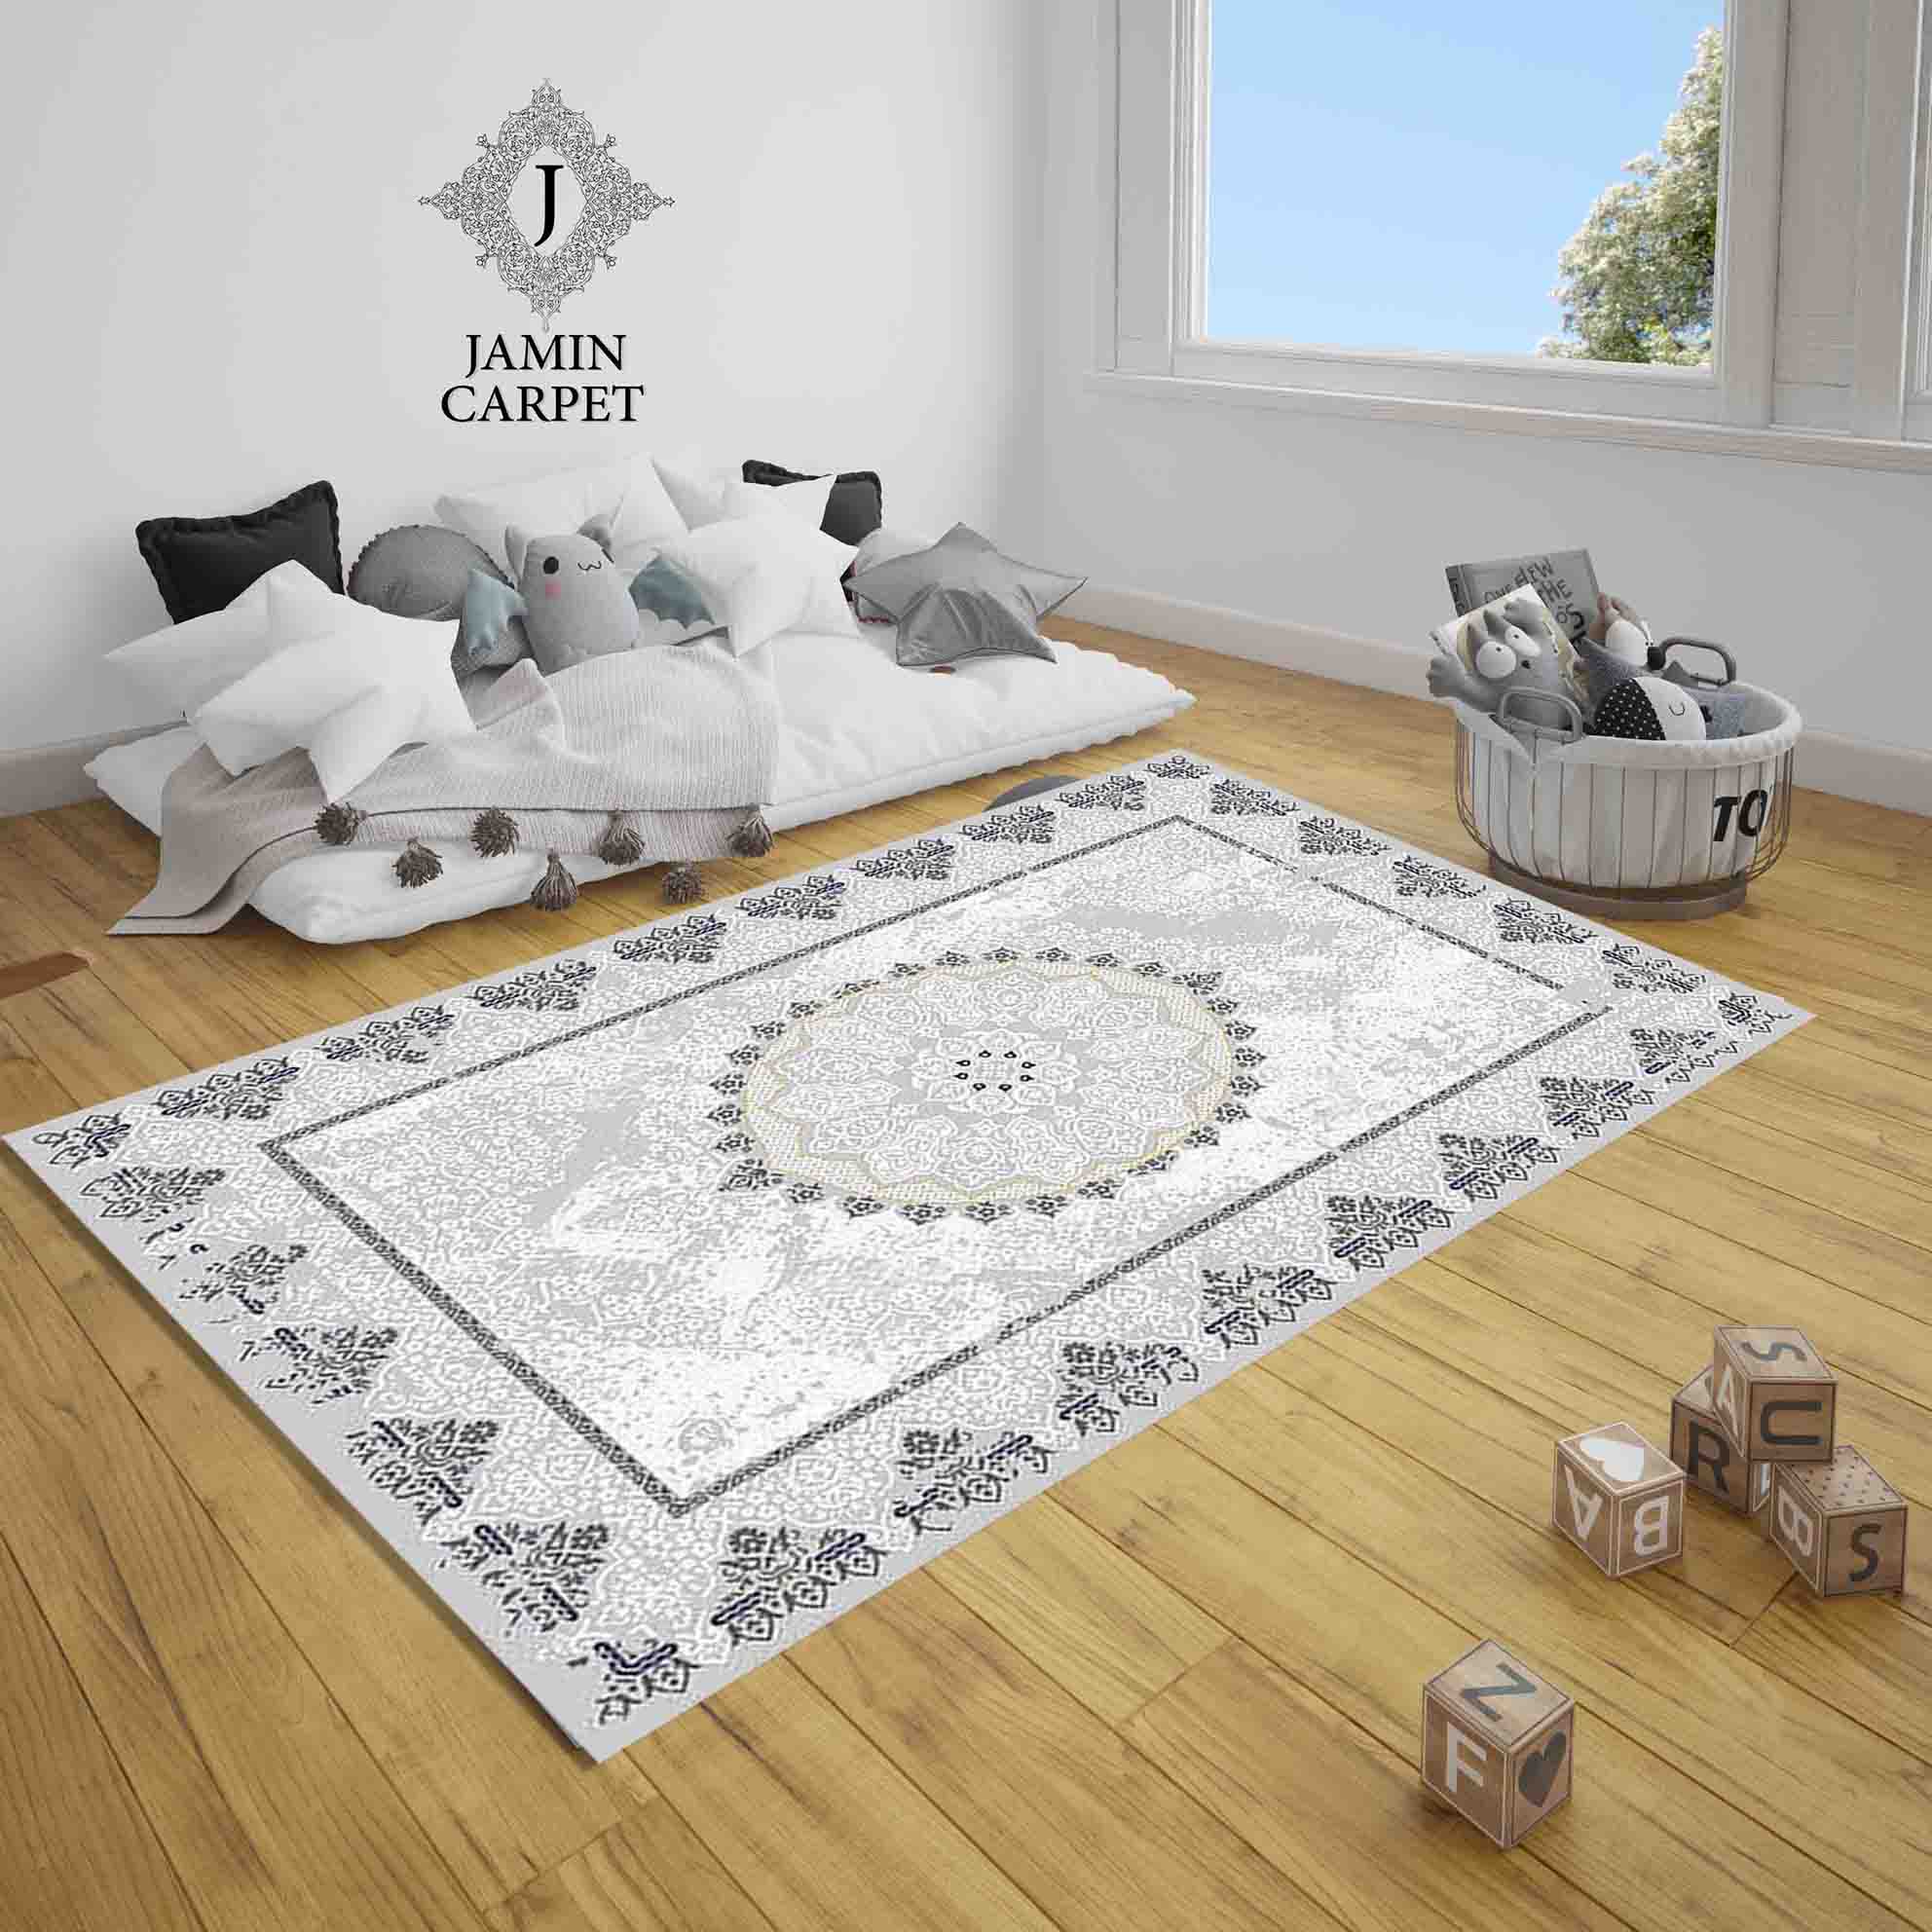 Fantasy carpet, code 260, comb 400, density 1800, all acrylic